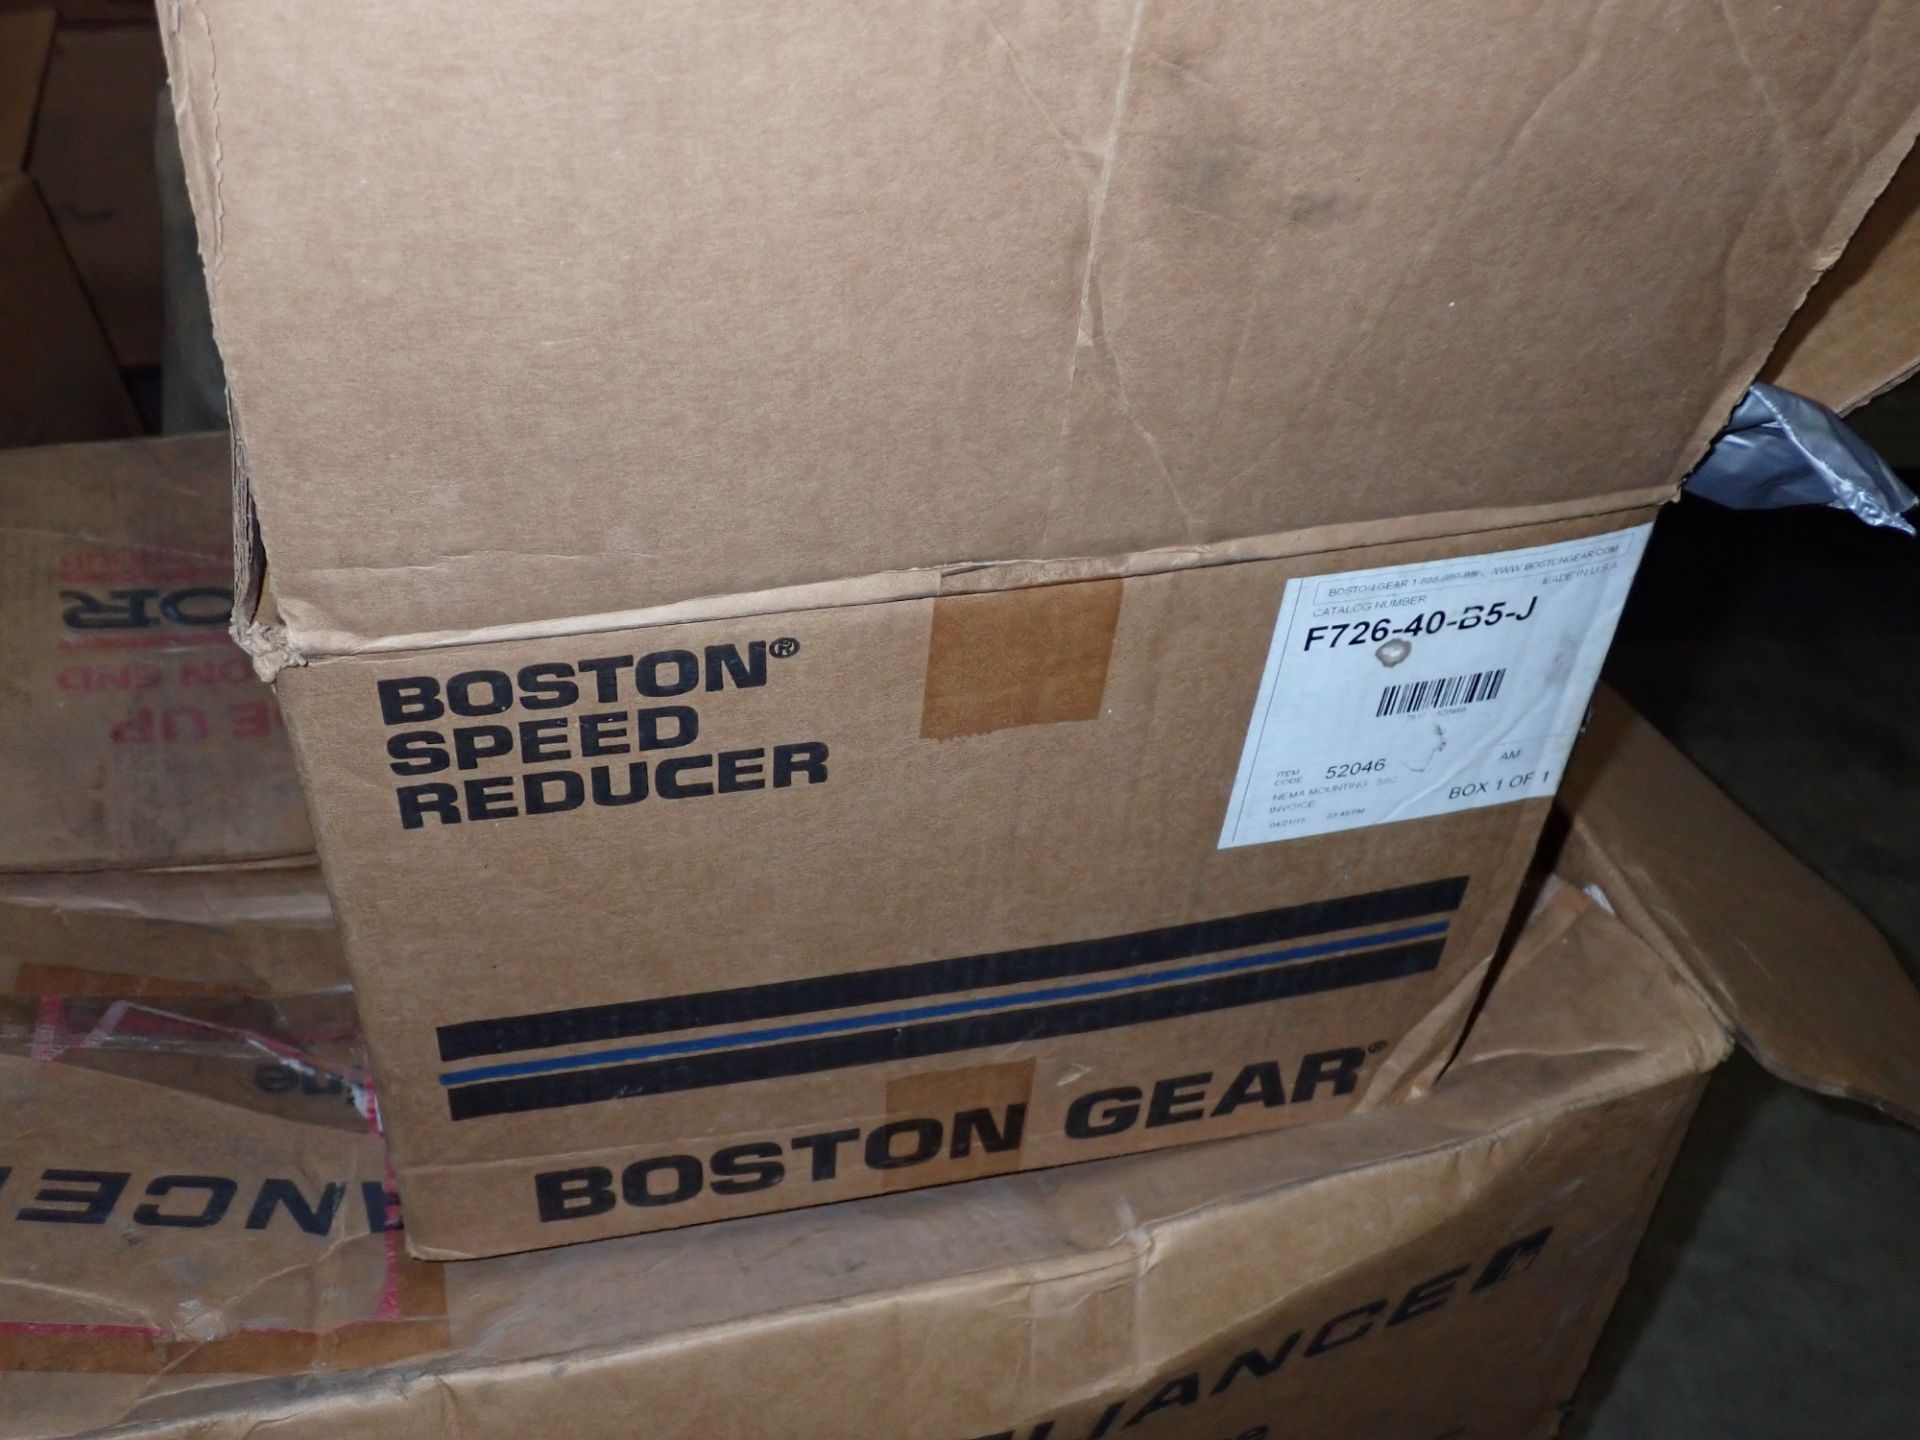 Boston Speed Reducer #F726-40-B5-J - Image 2 of 7